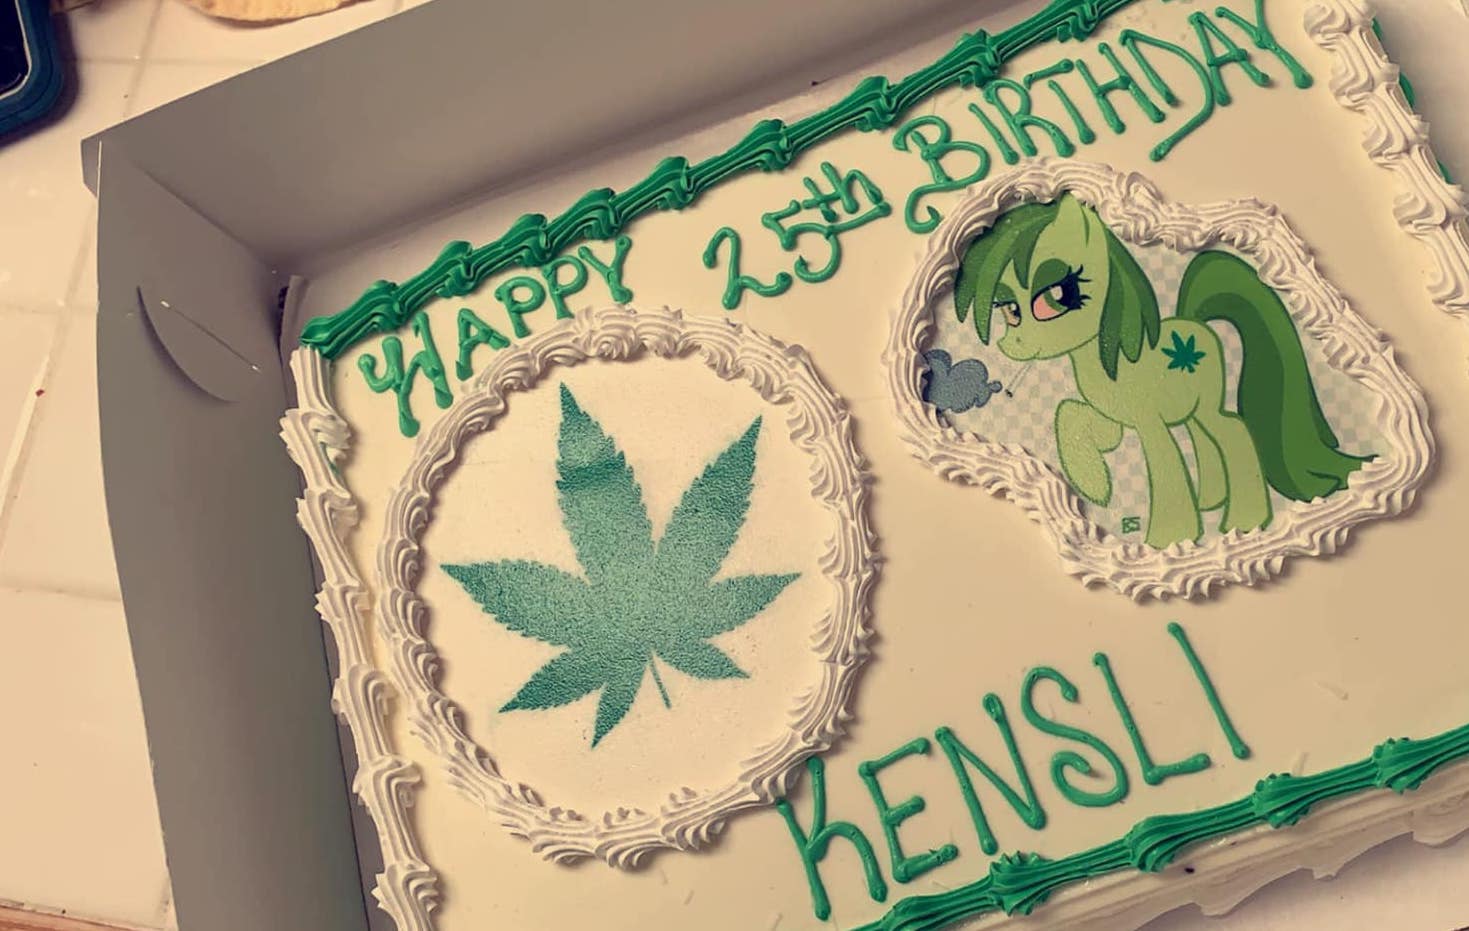 Mistaken Baker Creates “Marijuana” Cake Instead of “Moana” Cake